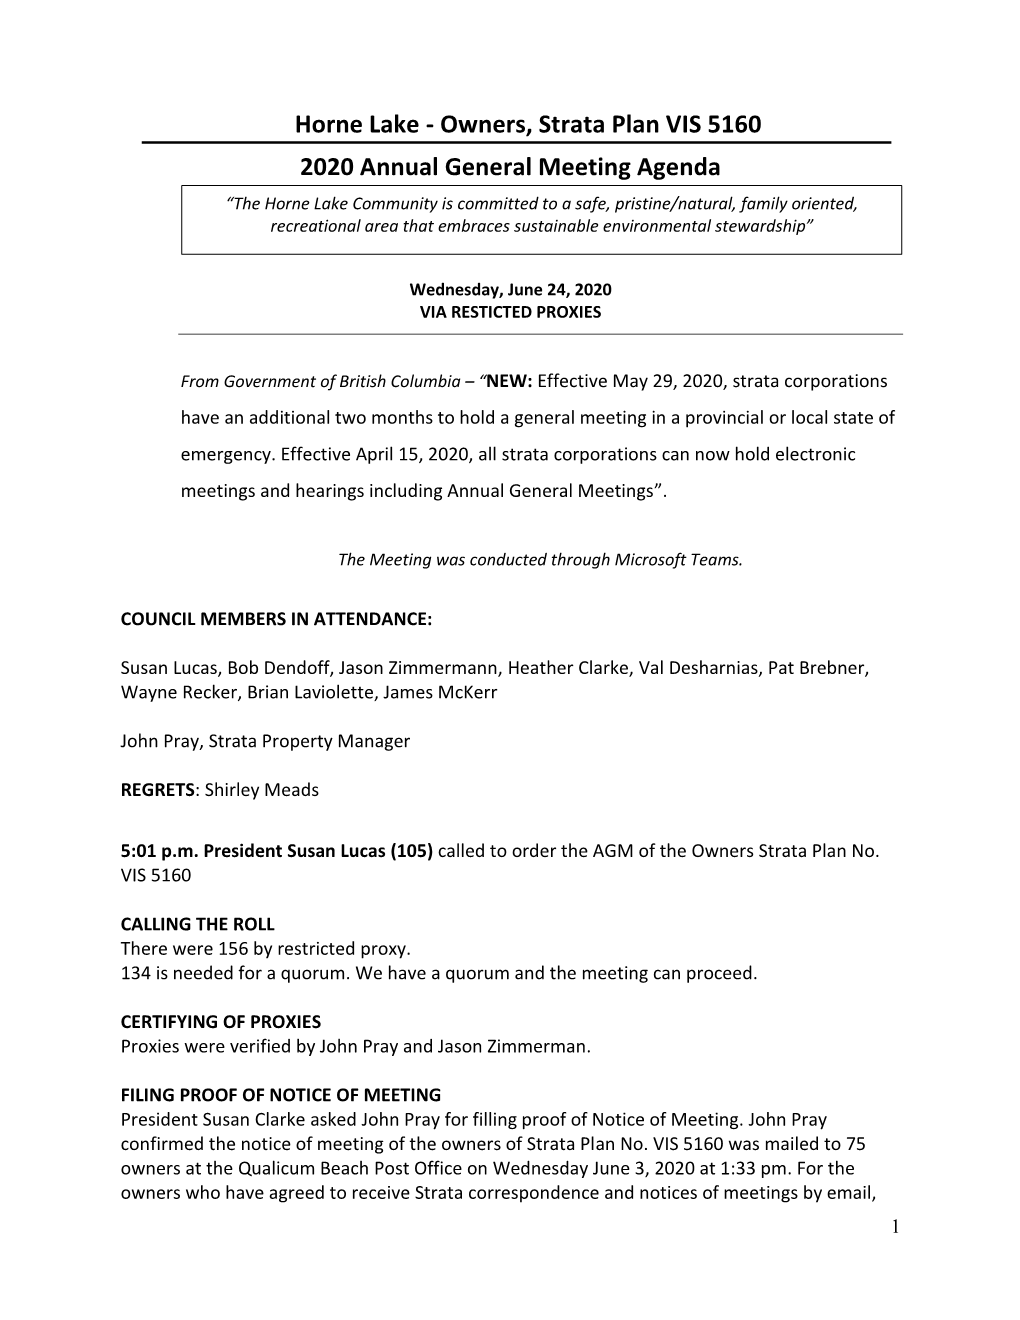 Owners, Strata Plan VIS 5160 2020 Annual General Meeting Agenda